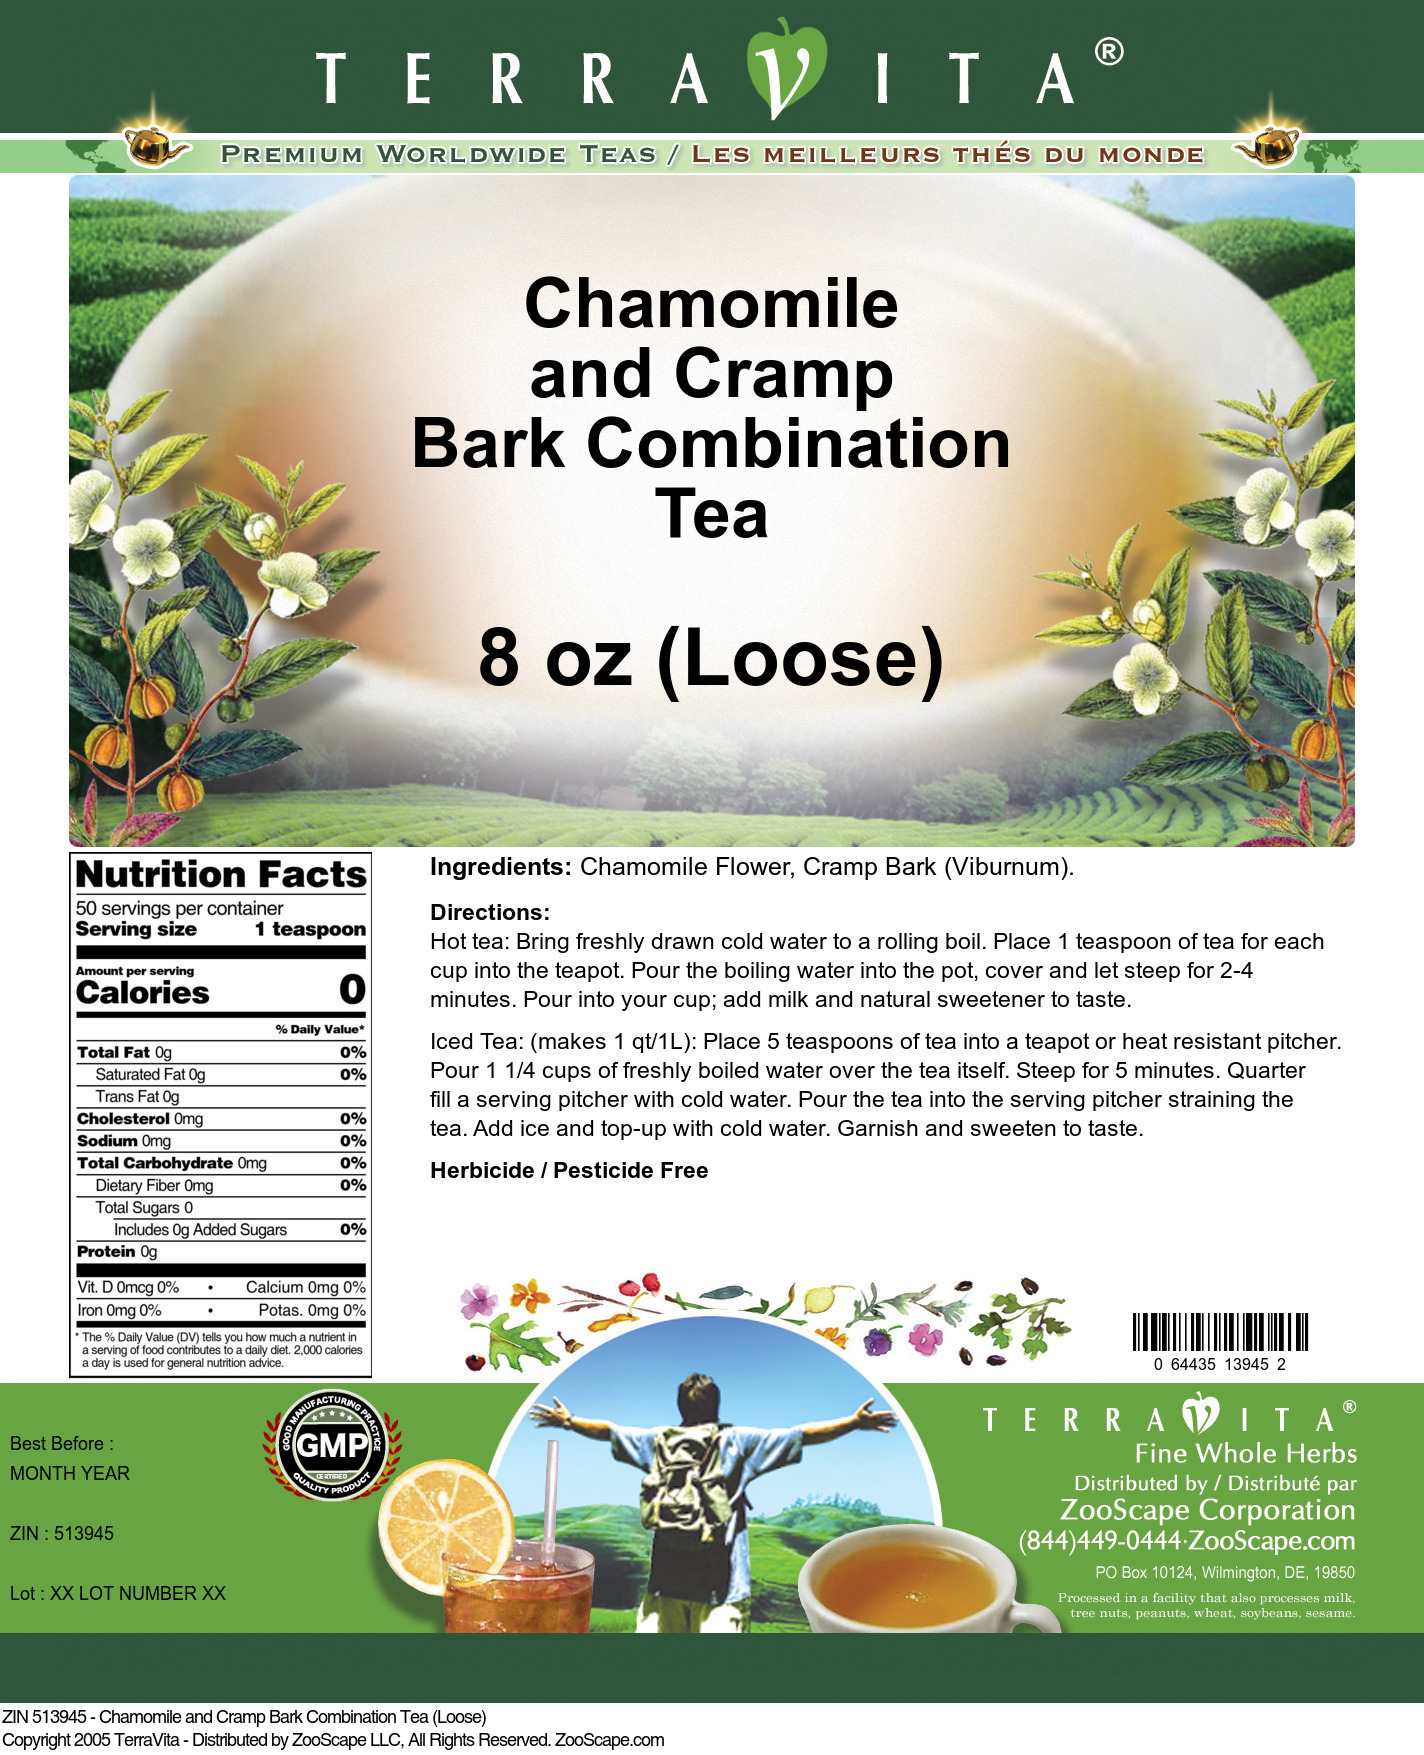 Chamomile and Cramp Bark Combination Tea (Loose) - Label